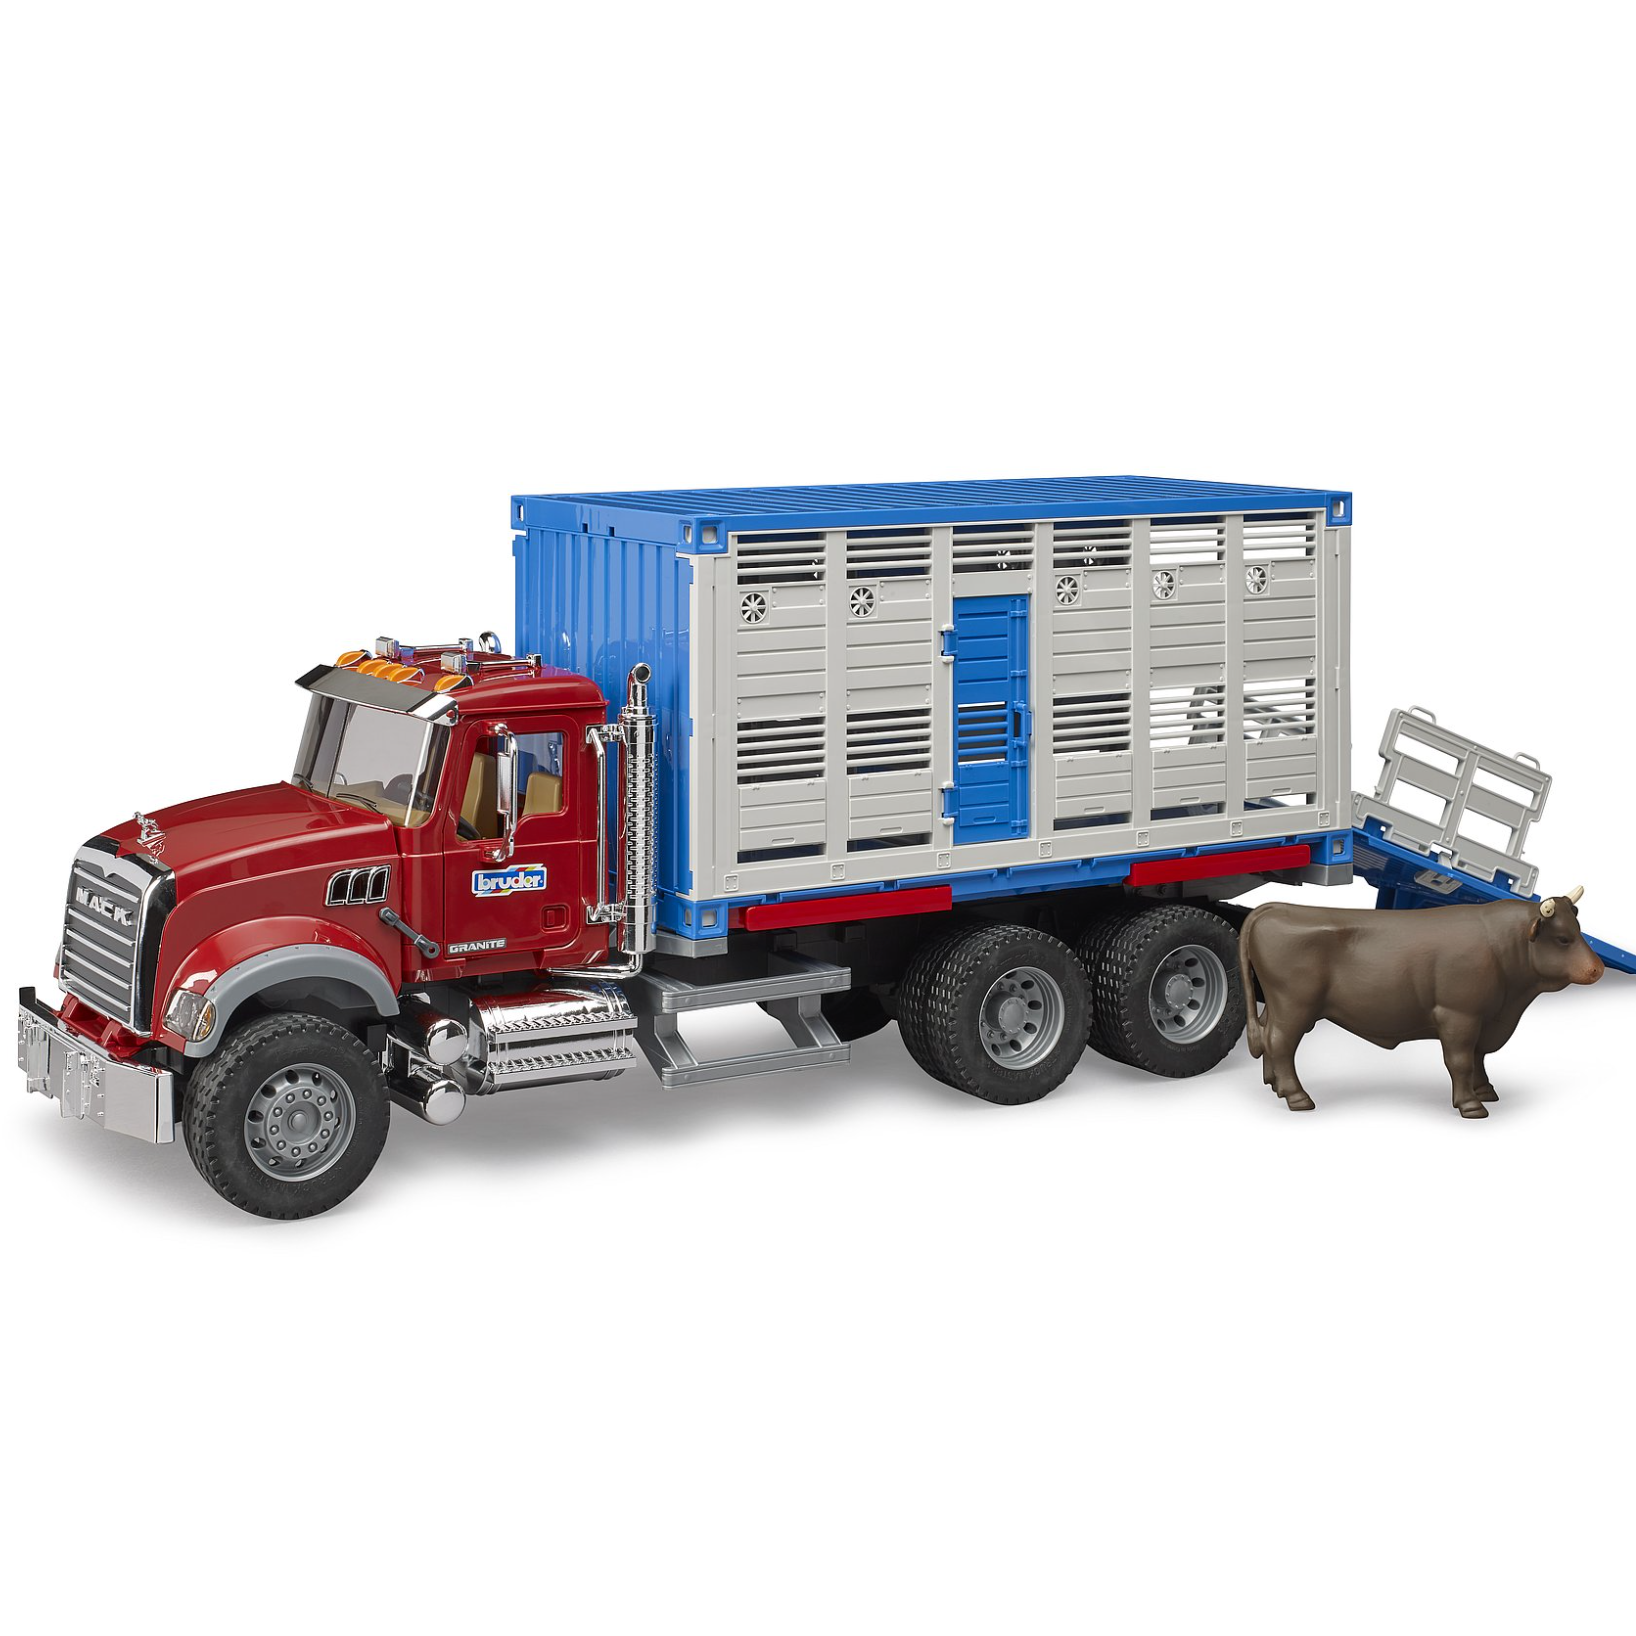 02830 Mack Granite Cattle Transport